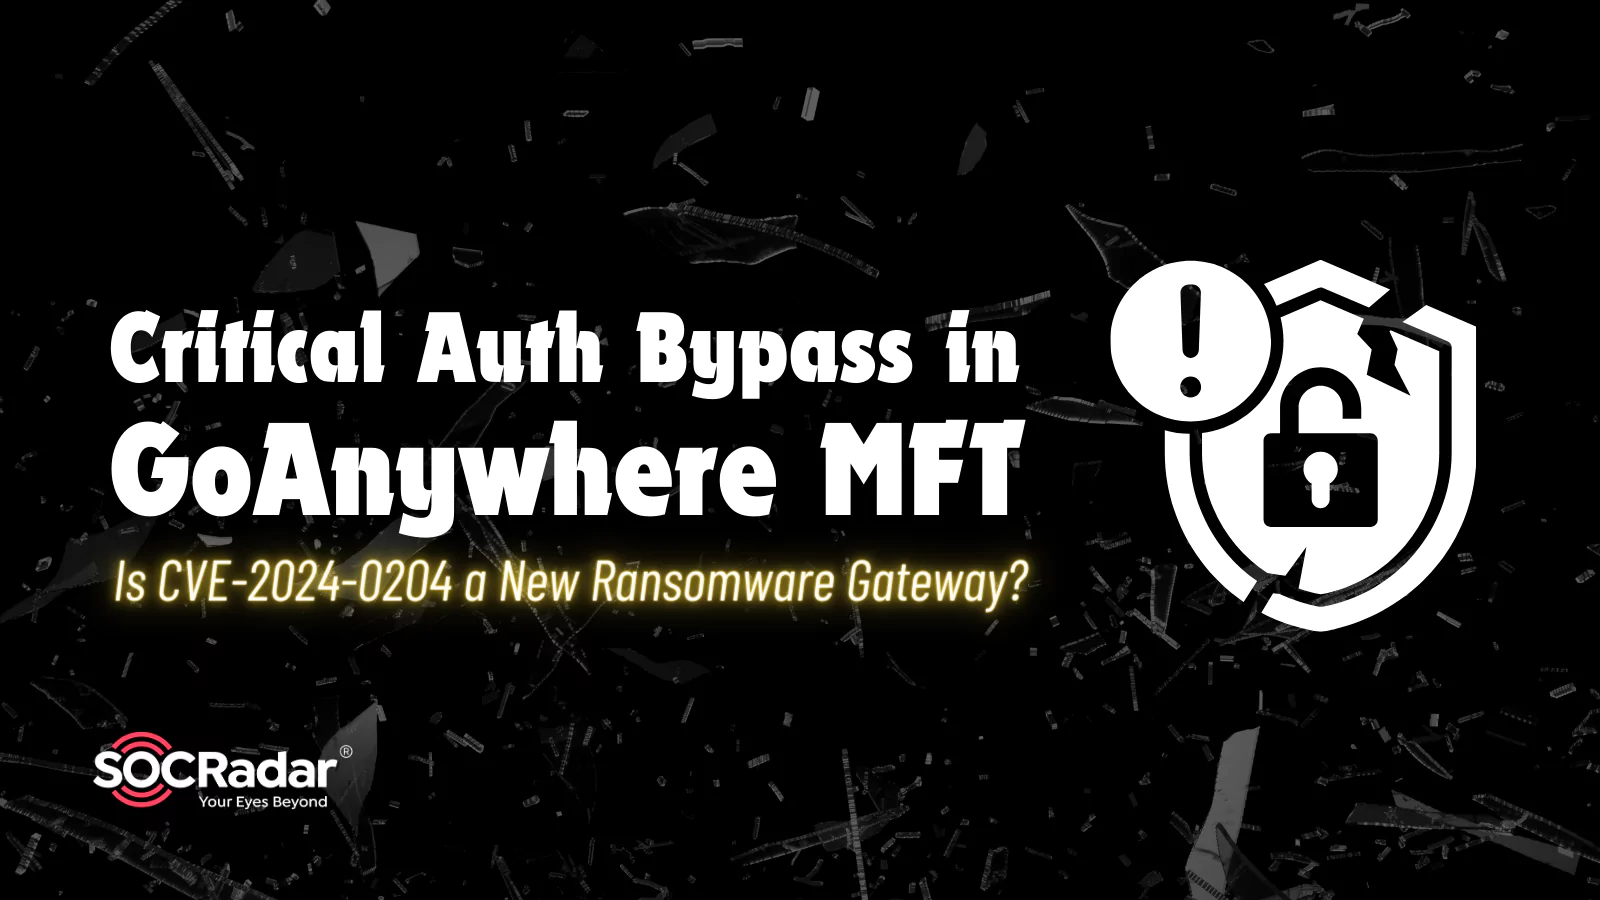 SOCRadar® Cyber Intelligence Inc. | Critical Auth Bypass in GoAnywhere MFT: Is It a New Ransomware Gateway? (CVE-2024-0204)